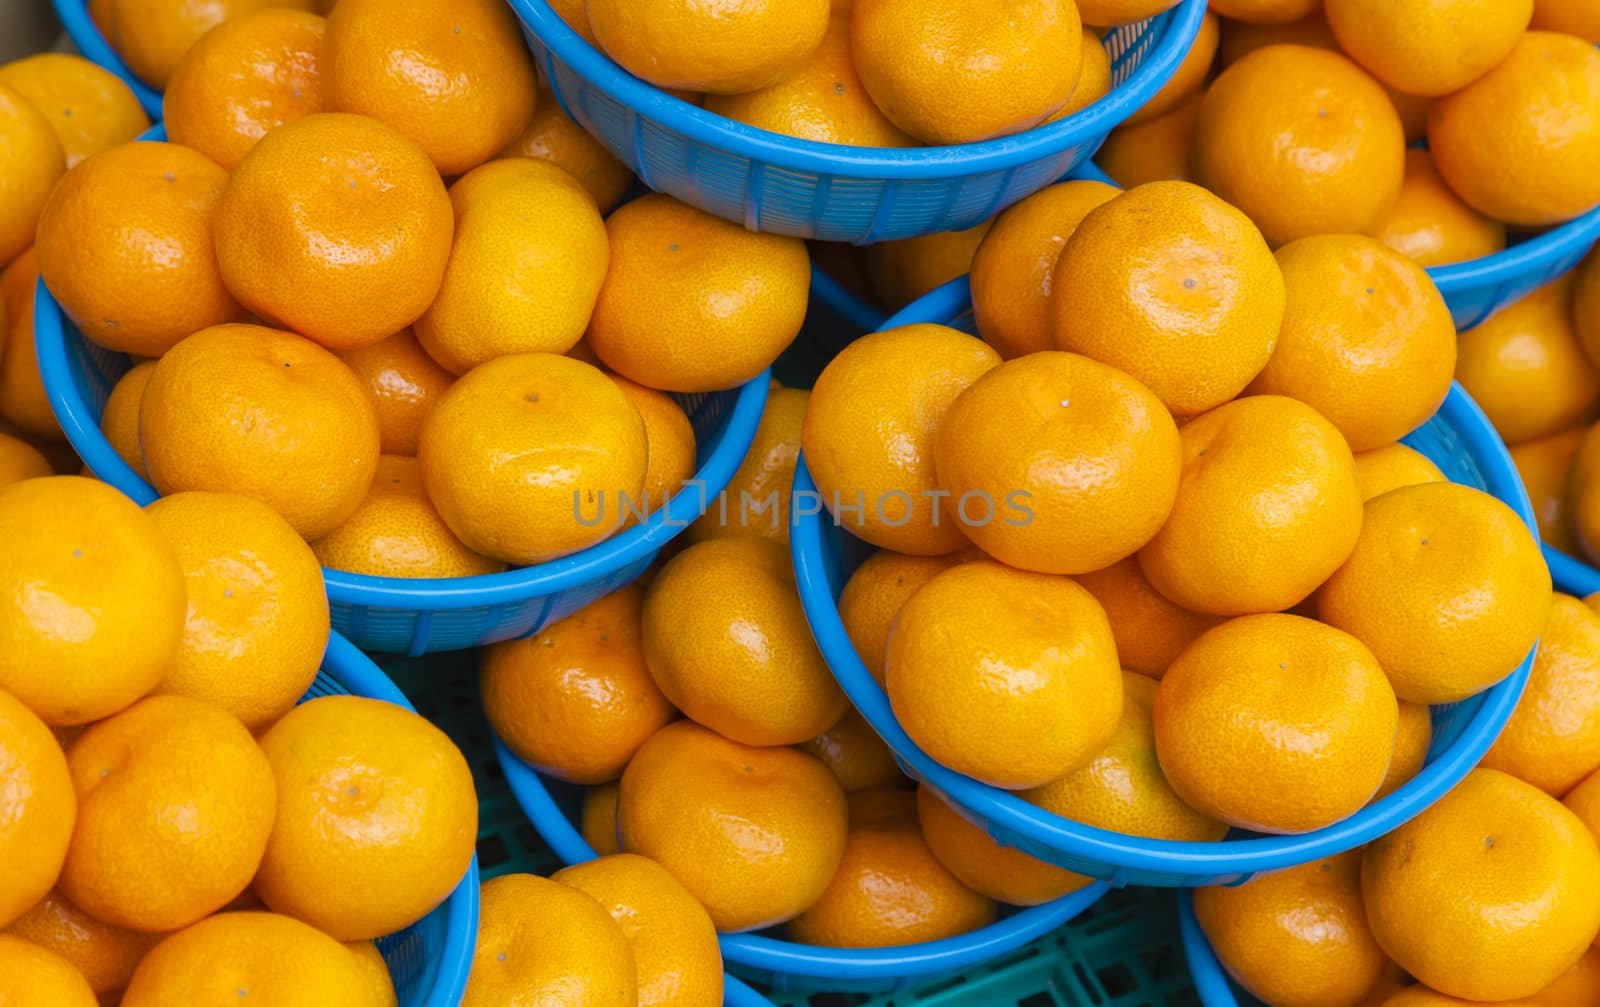 Oranges in baskets for sale in a food market in Japan